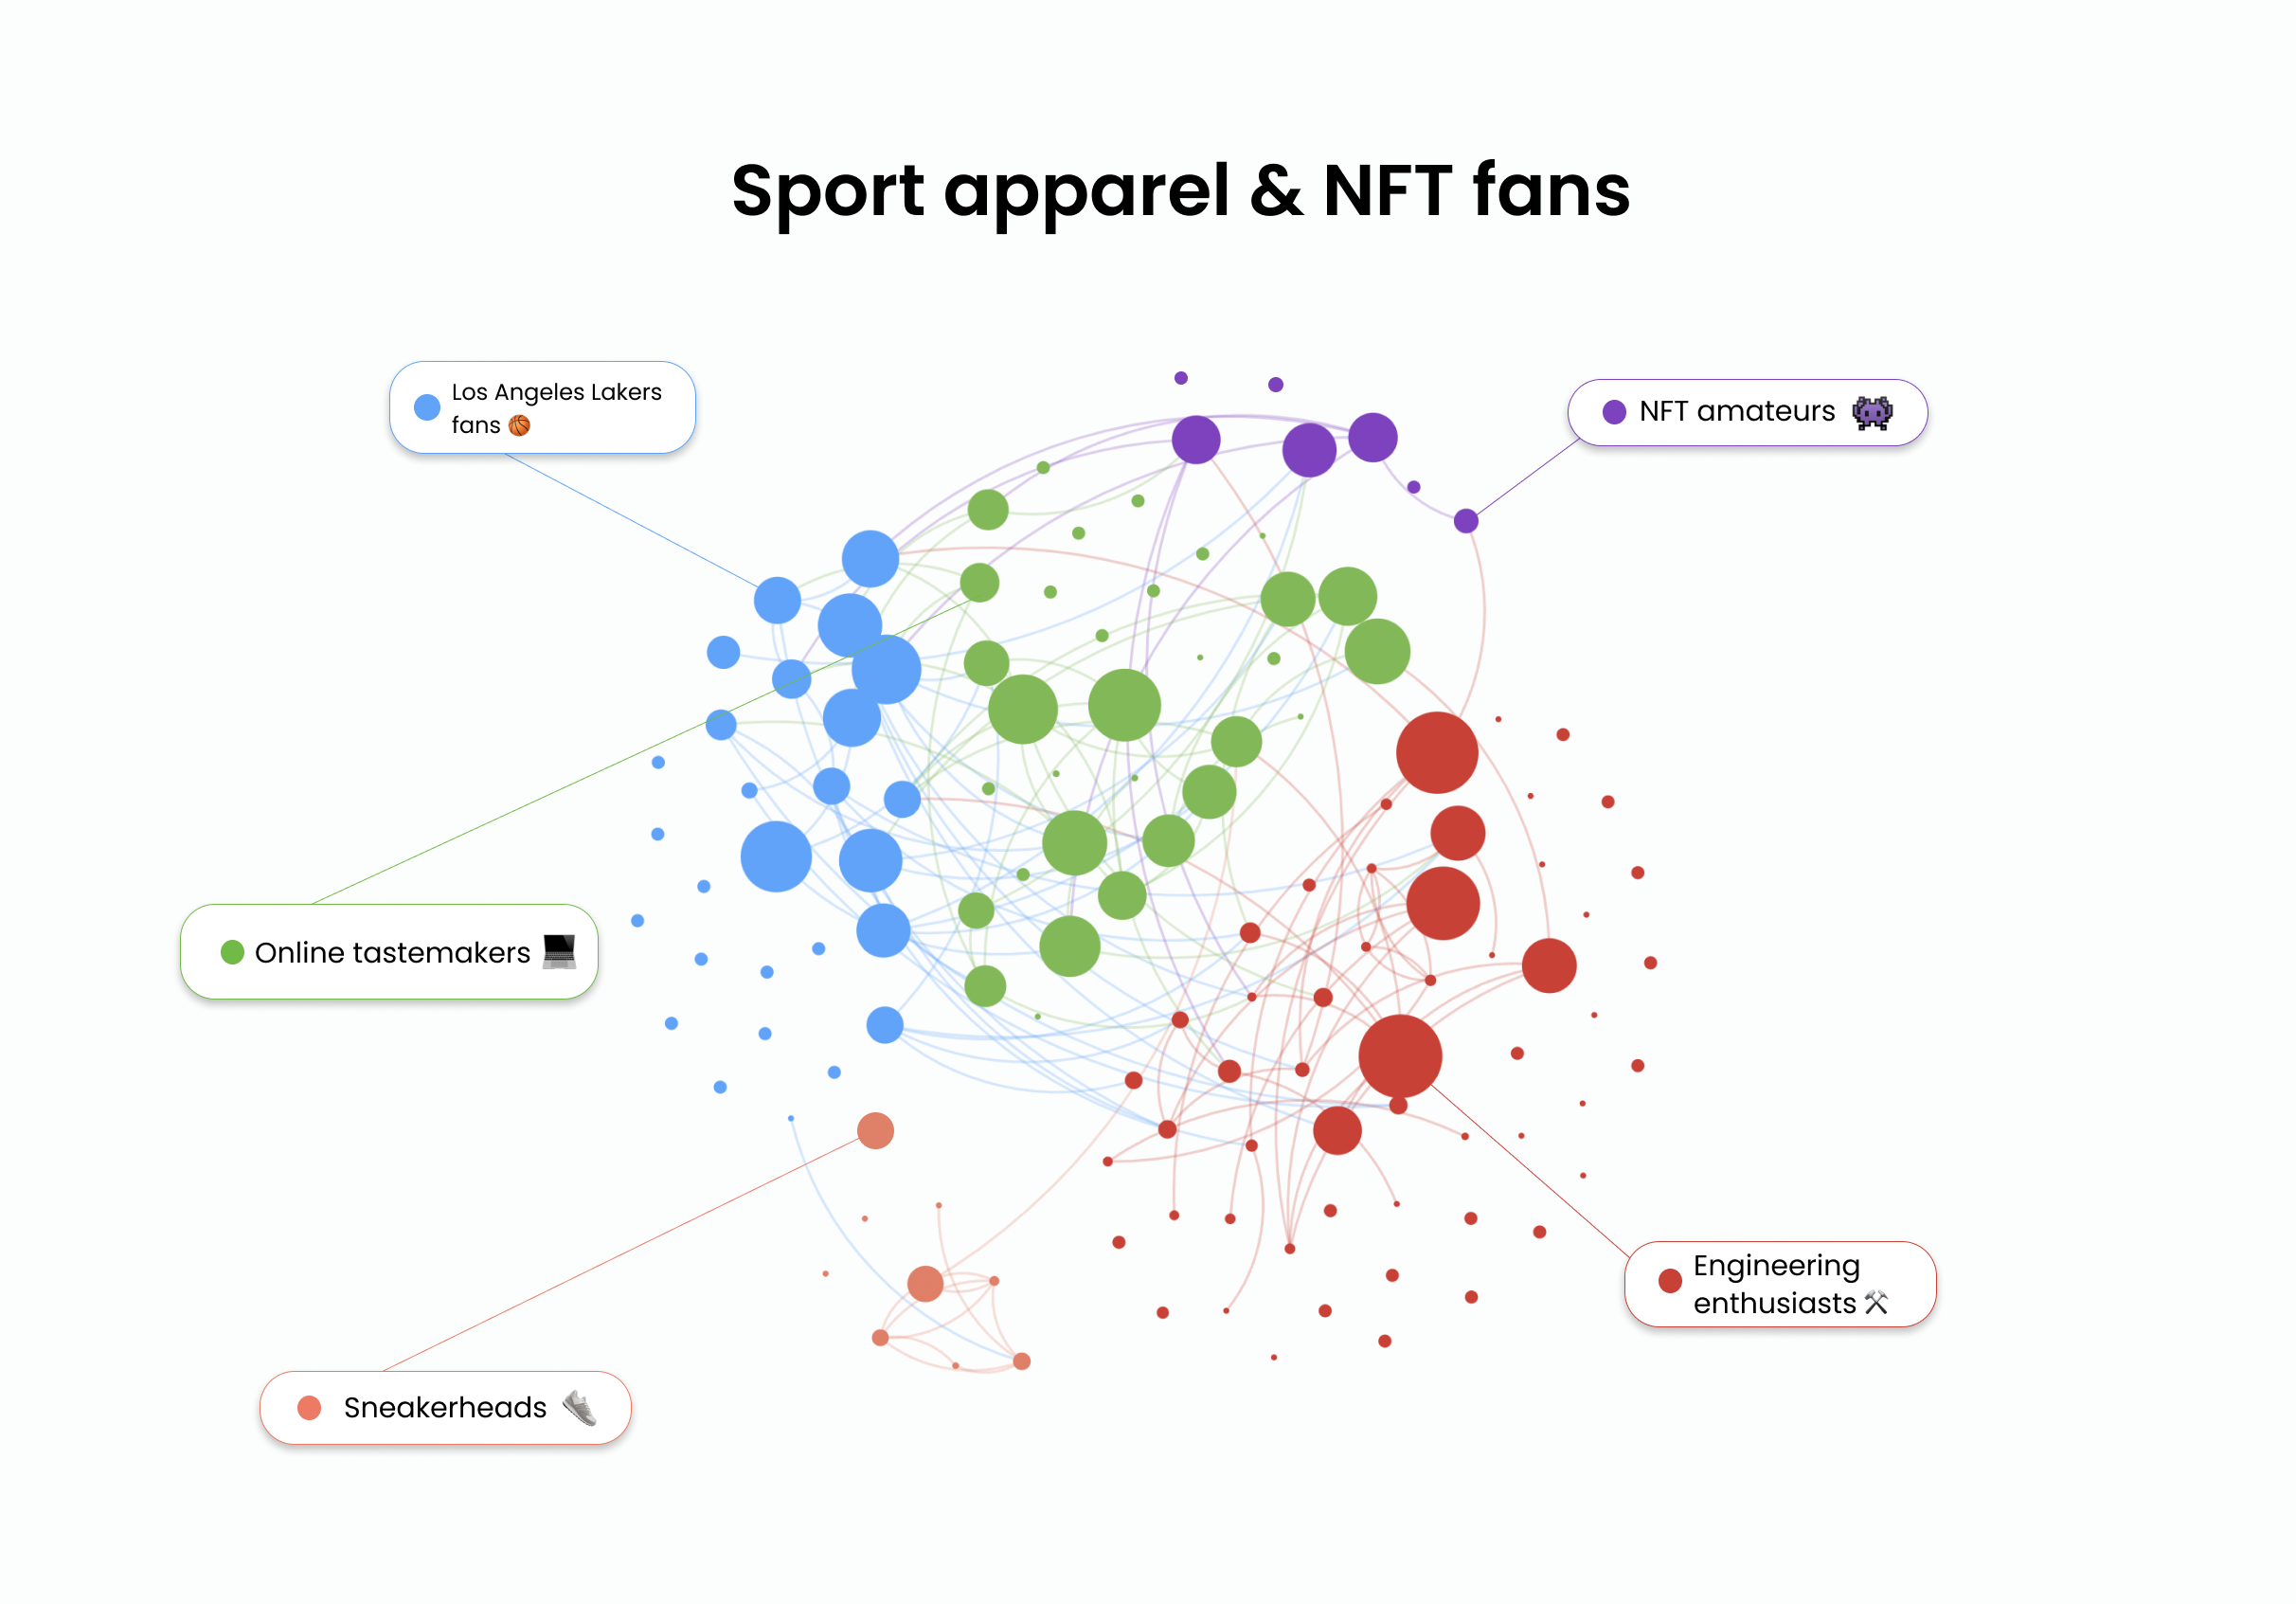 Audiense blog - segmentos de Sport apparel y NFT fans